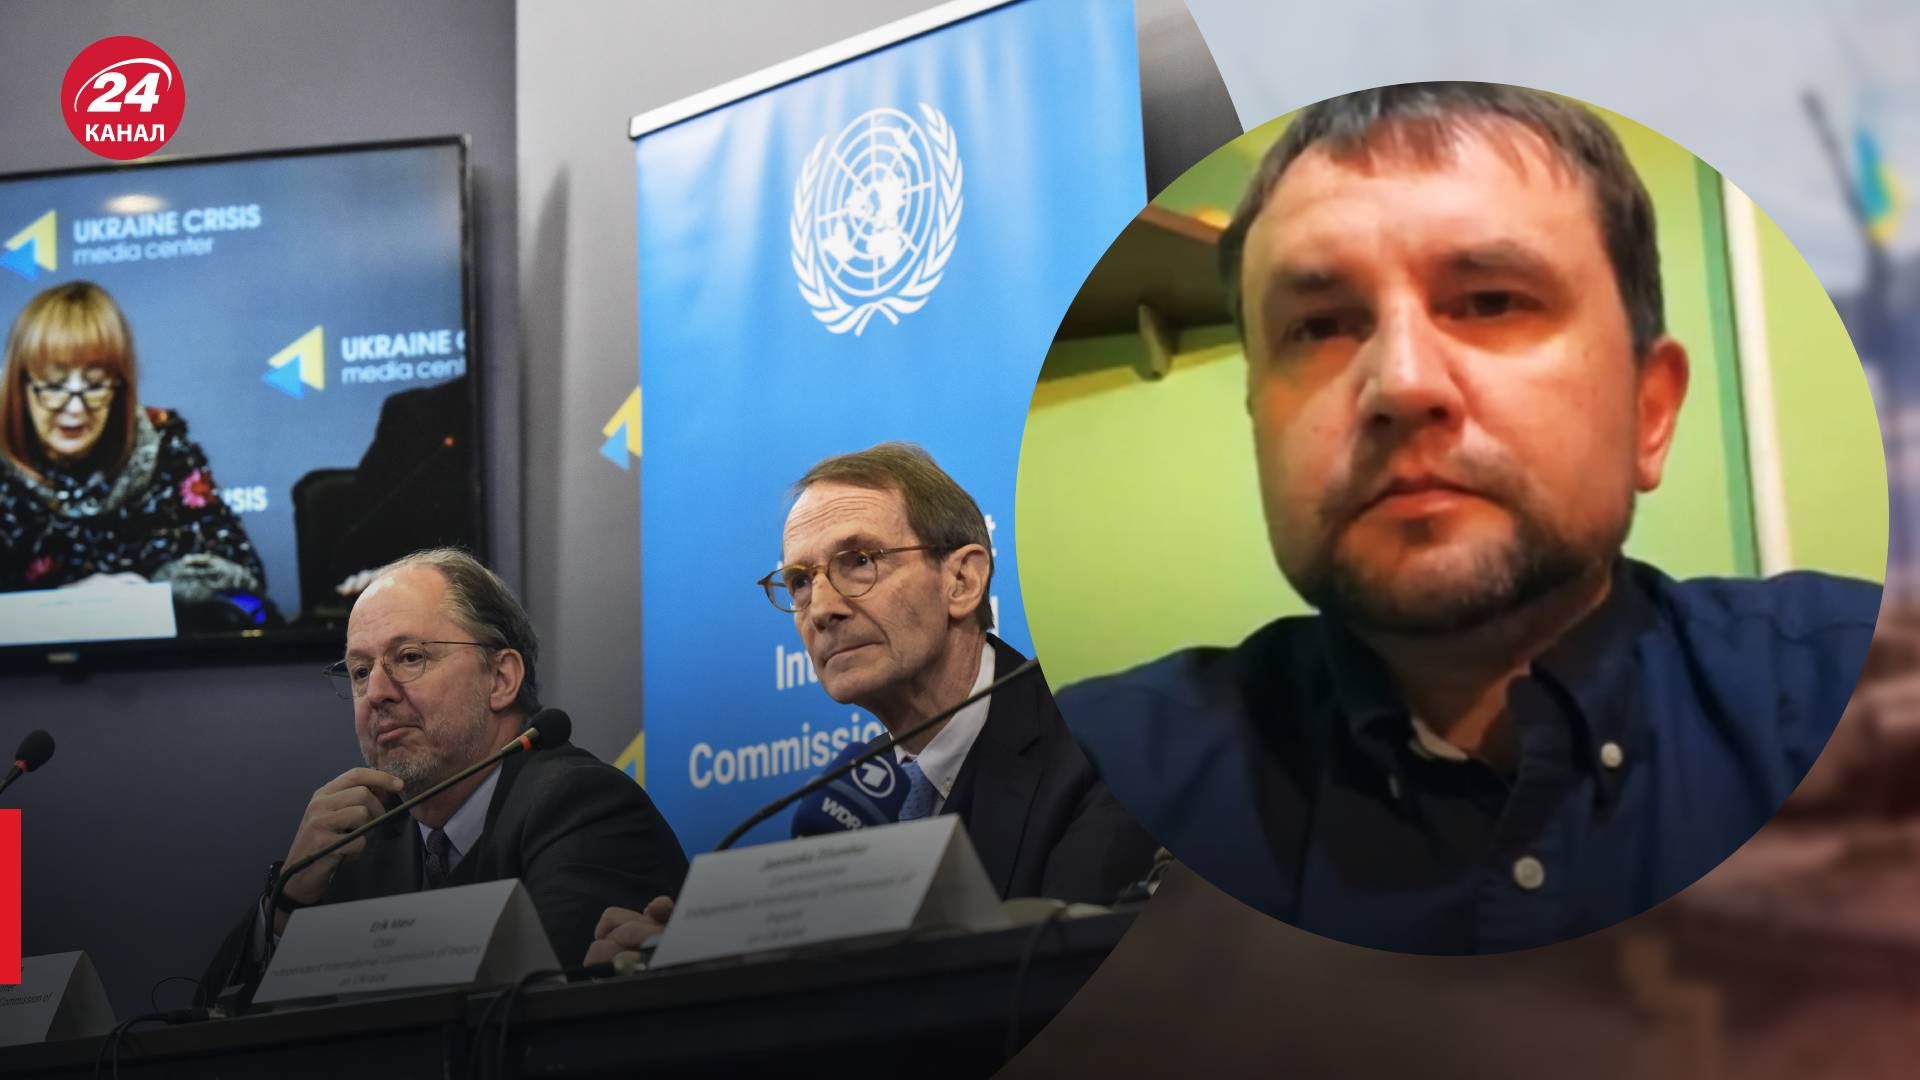 Почему в ООН не видят геноцида украинцев - комментарий Вятровича - 24 Канал